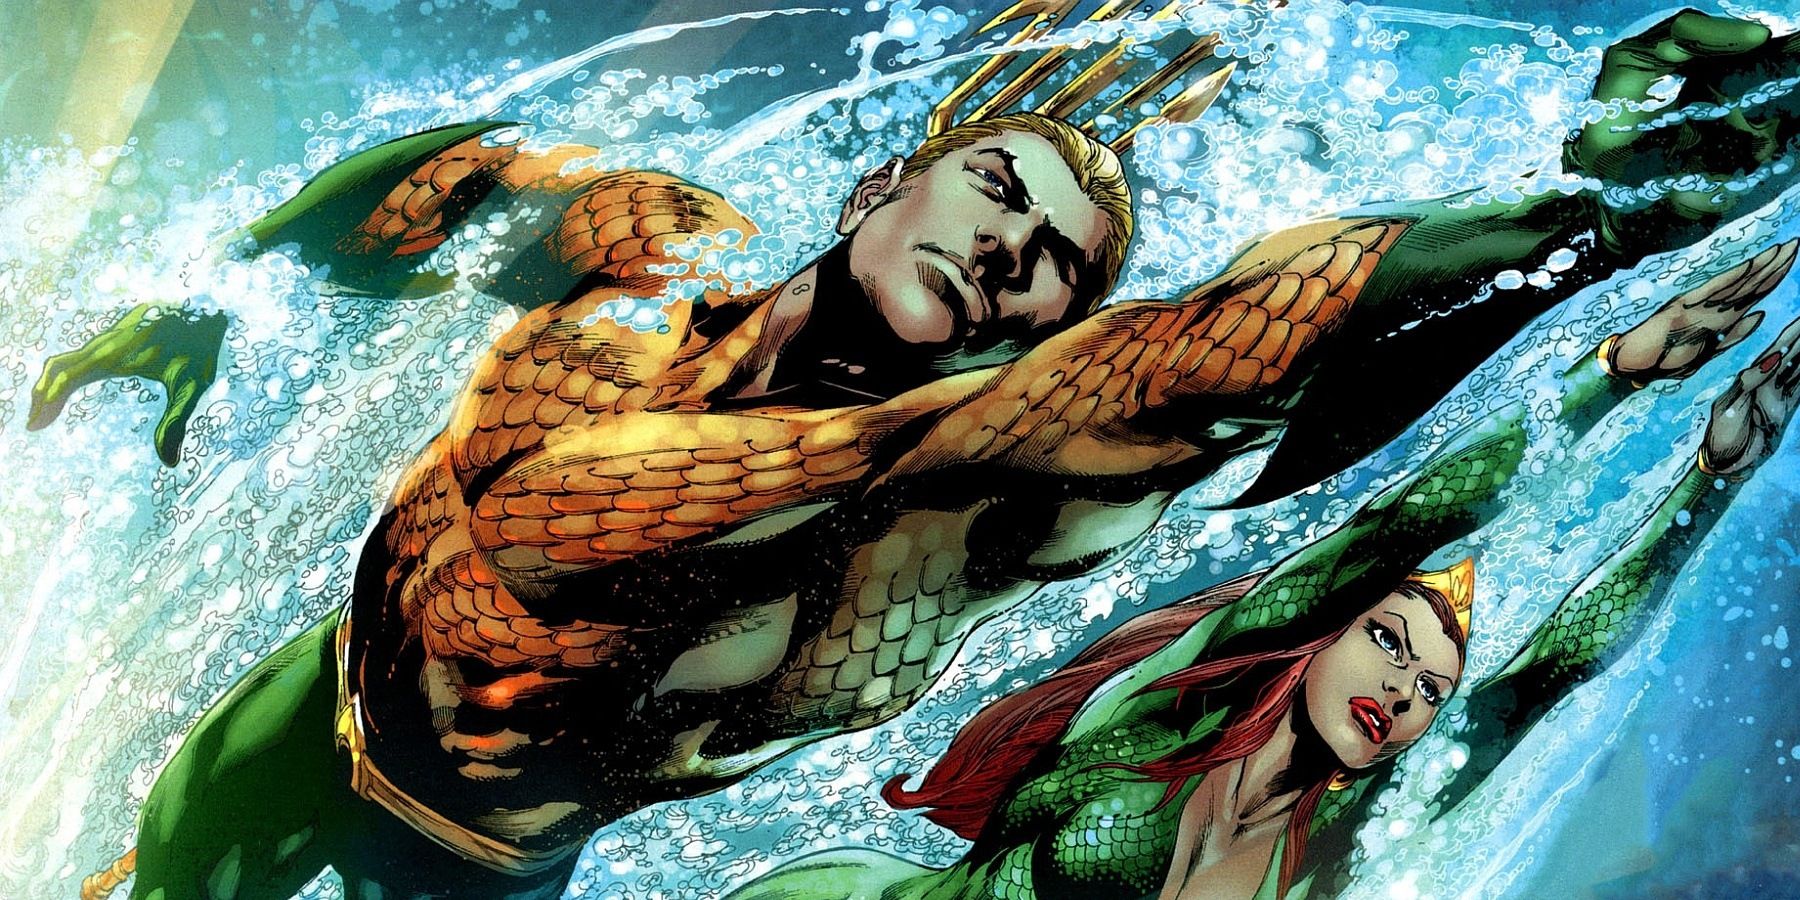 Aquaman speeding in the water